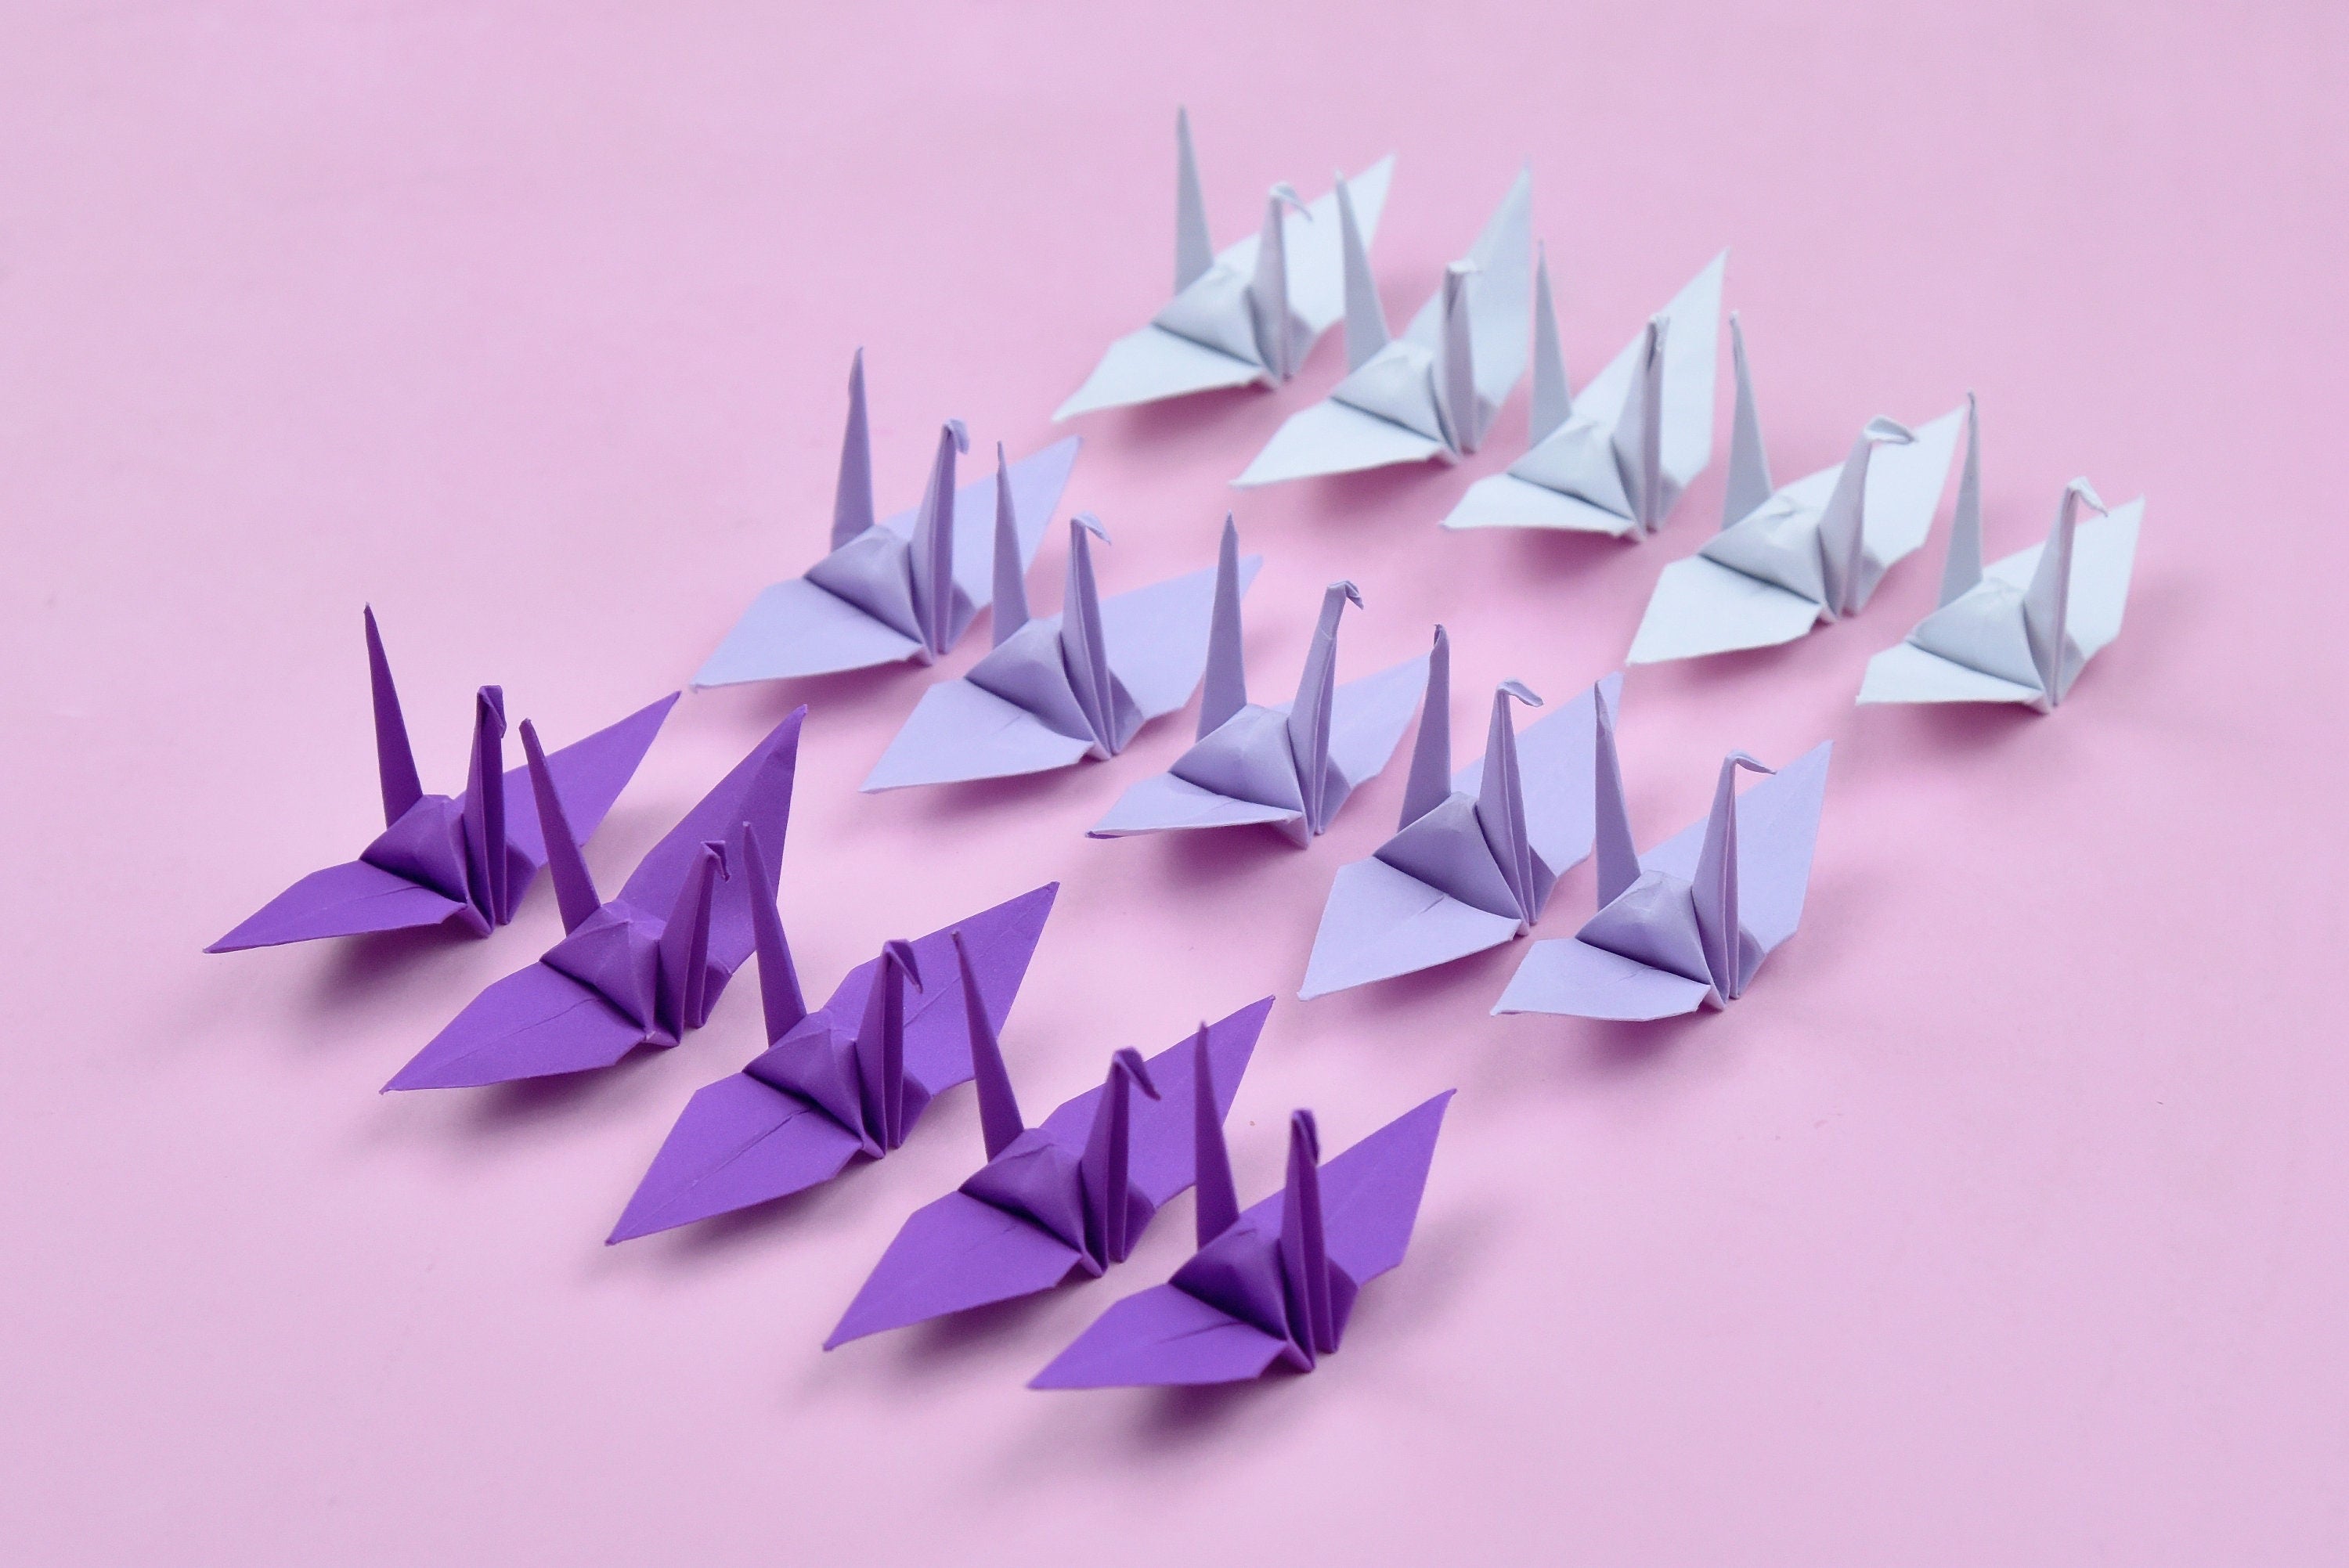 100 Origami Paper Crane Purple Shade Tone 3x3 inches for Wedding Decor, Anniversary Gift, Valentines, Backdrop